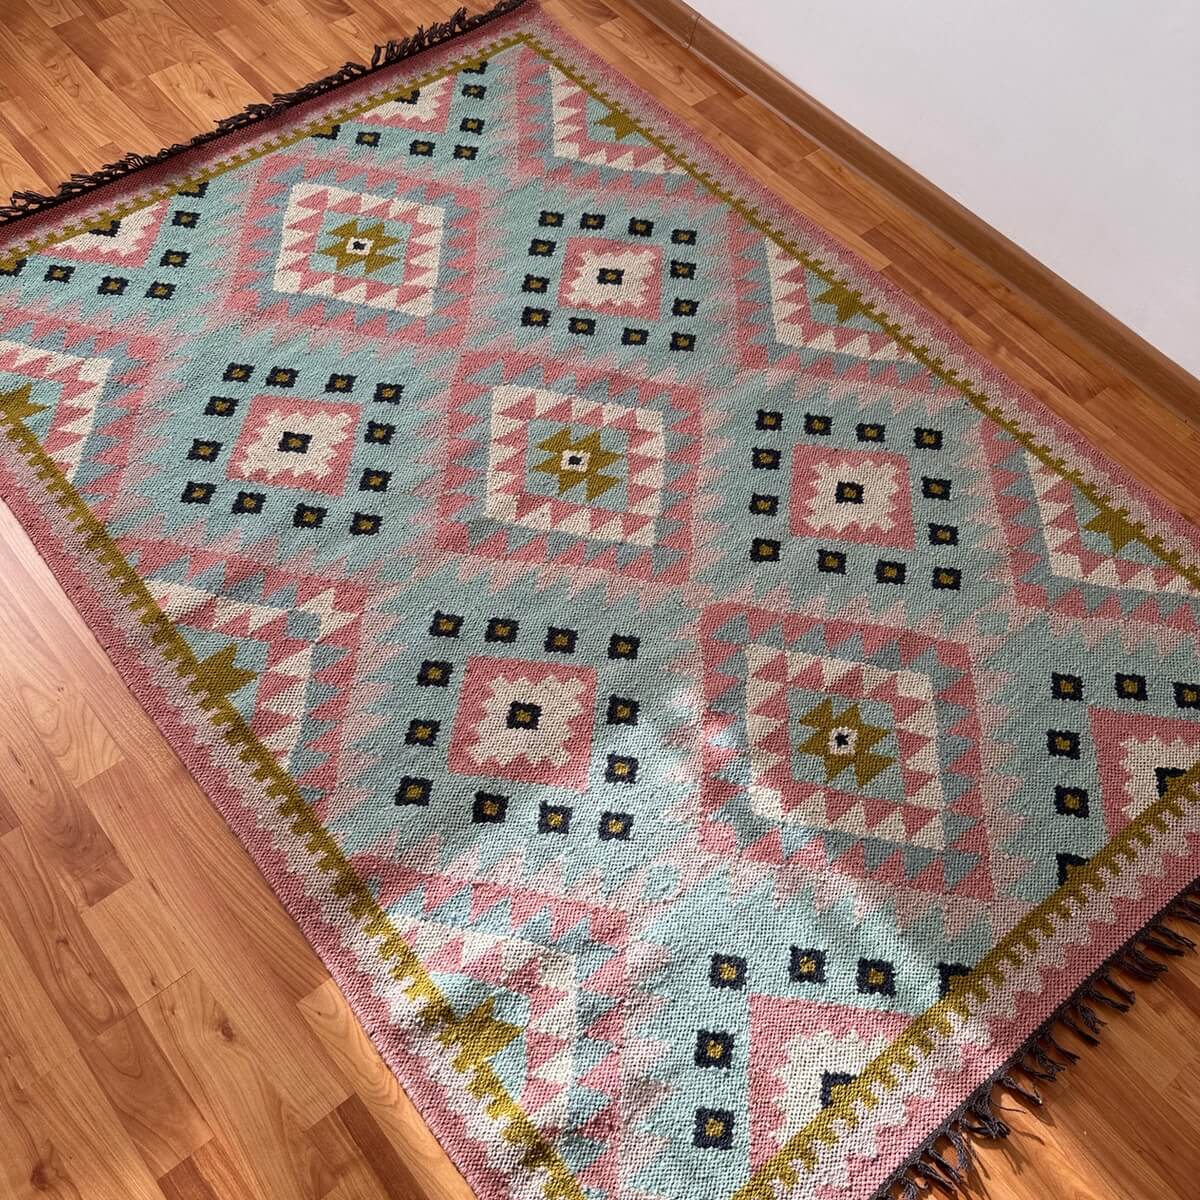 covor traditional kilim Jovita tesut manual 100% din lana, model geometric in romb in culori roz si turcoaz, pe podea